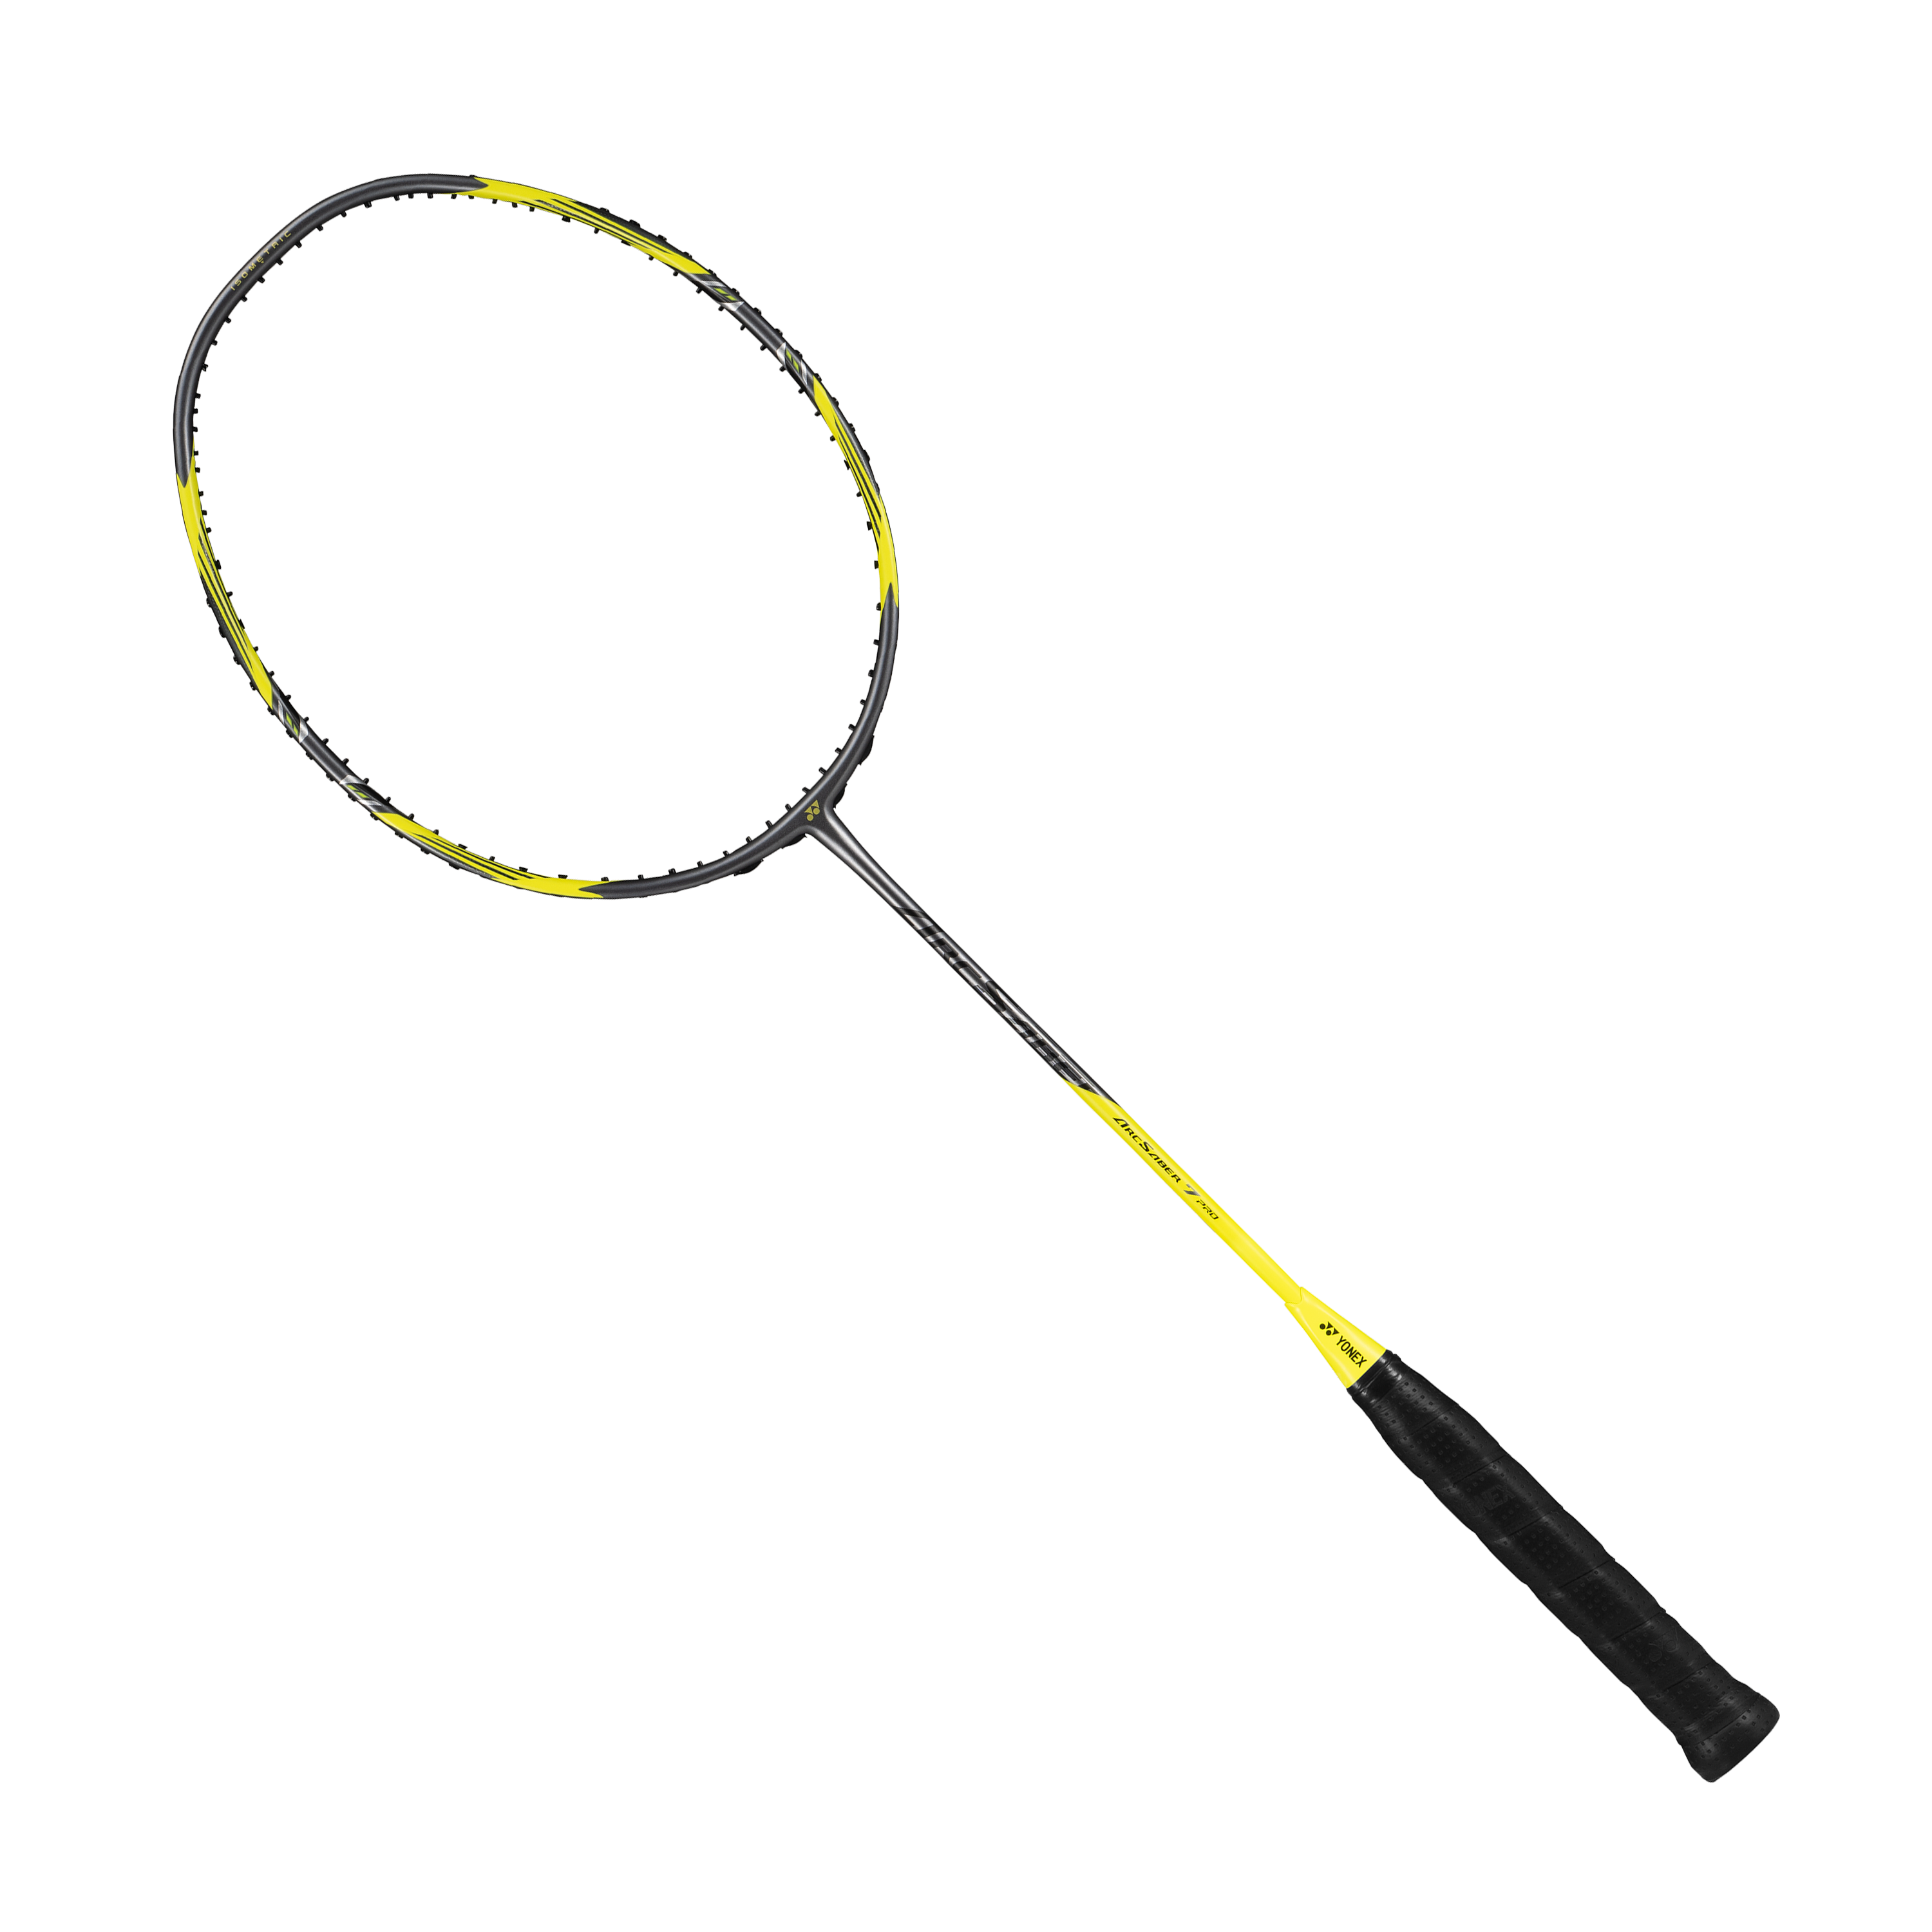 Yonex Arcsaber 7 Pro Balanced Badminton Racquet 4U(83g)G6